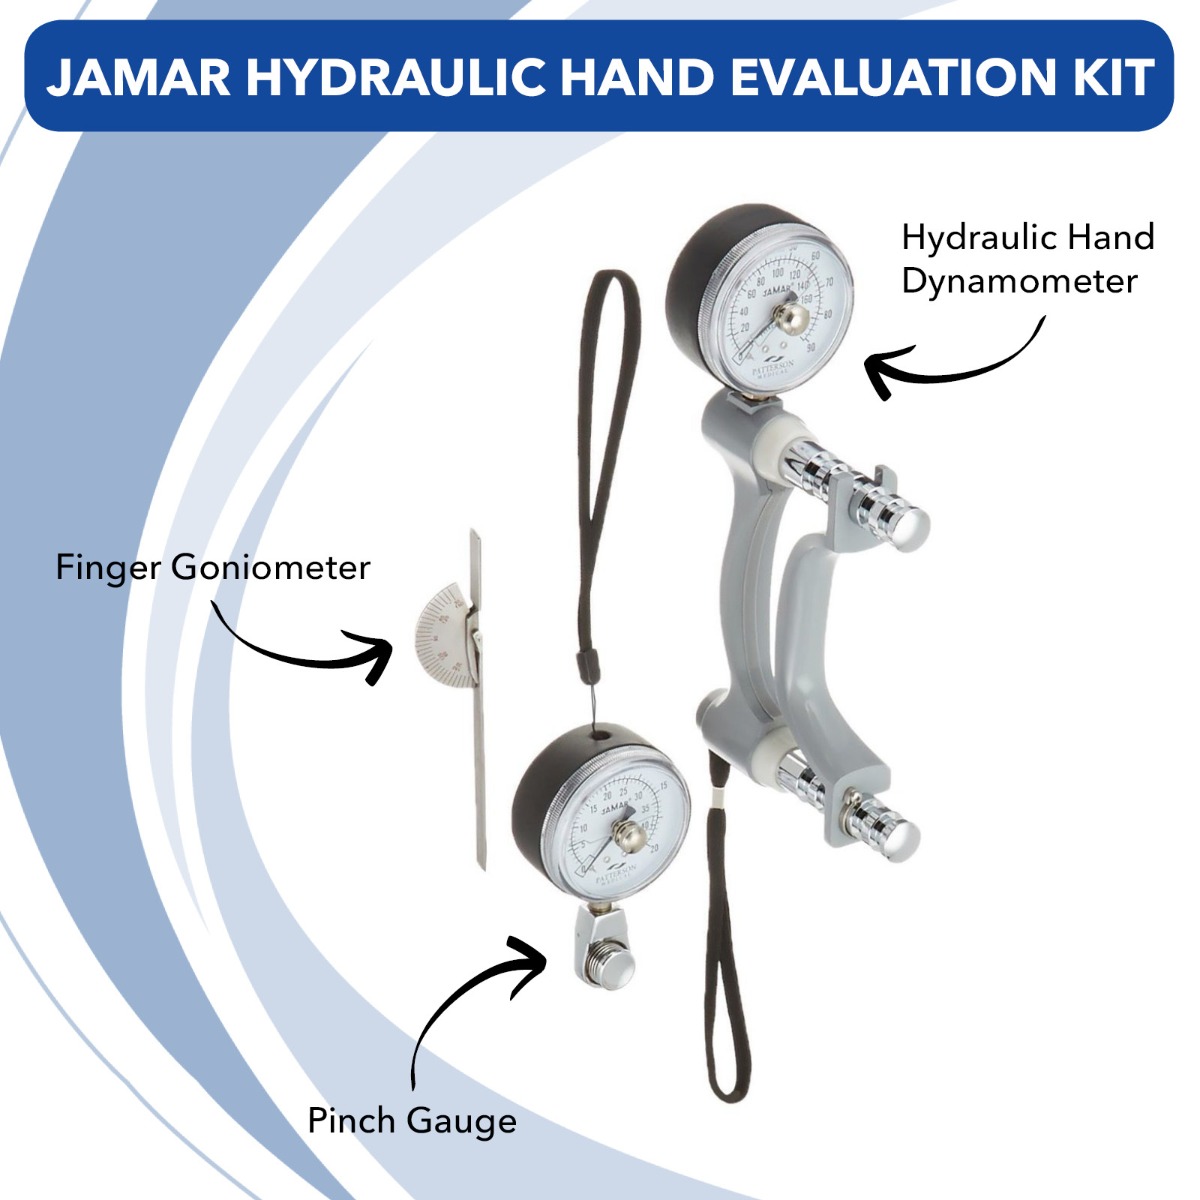 Jamar hand evaluation kit